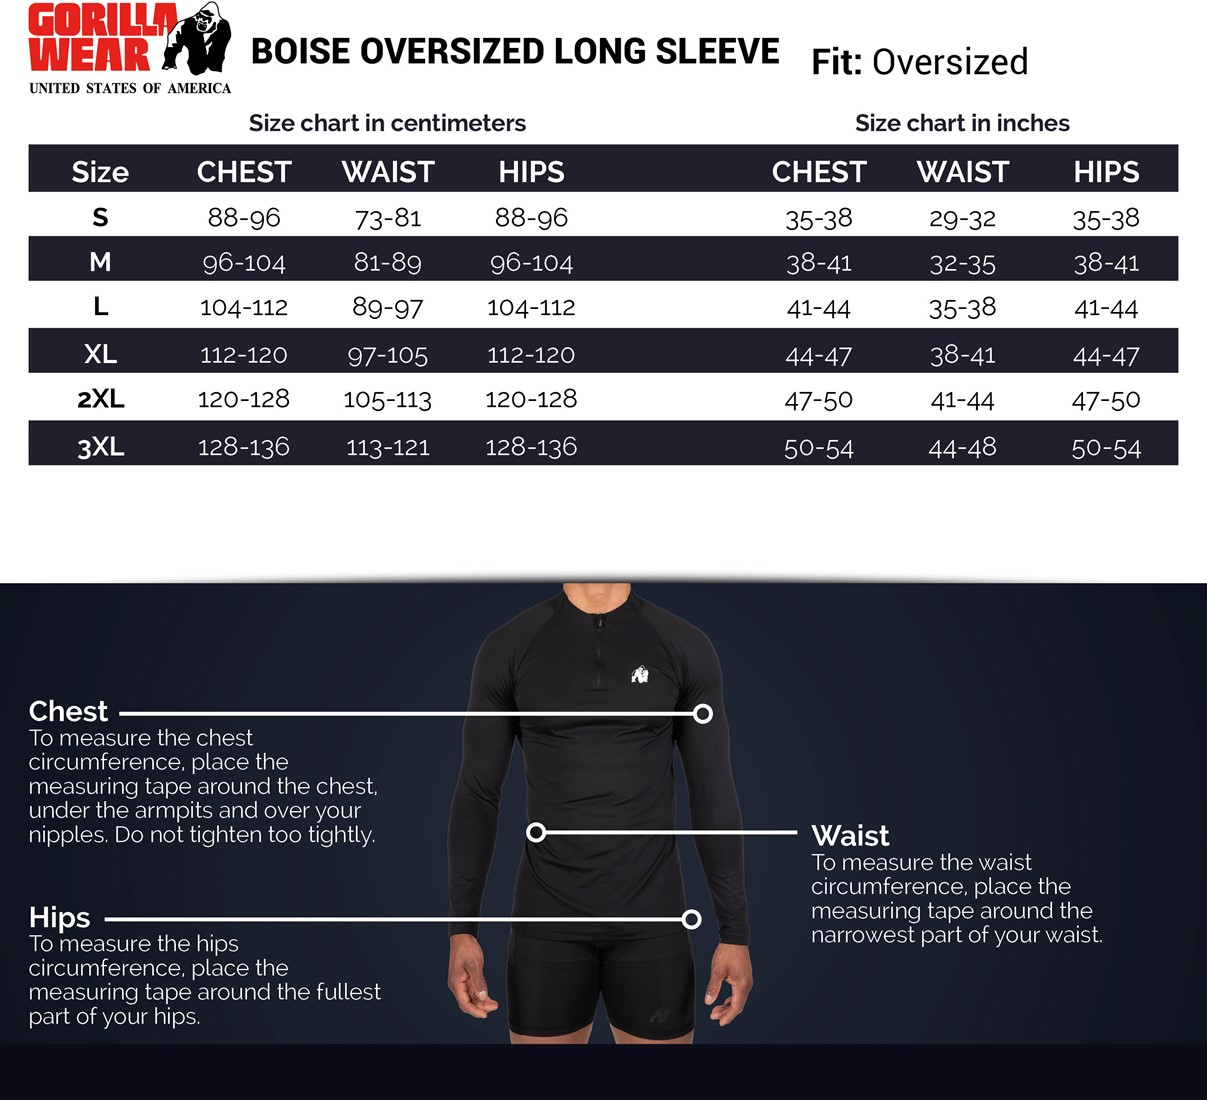 boise-long-sleeve-size-chart (1)